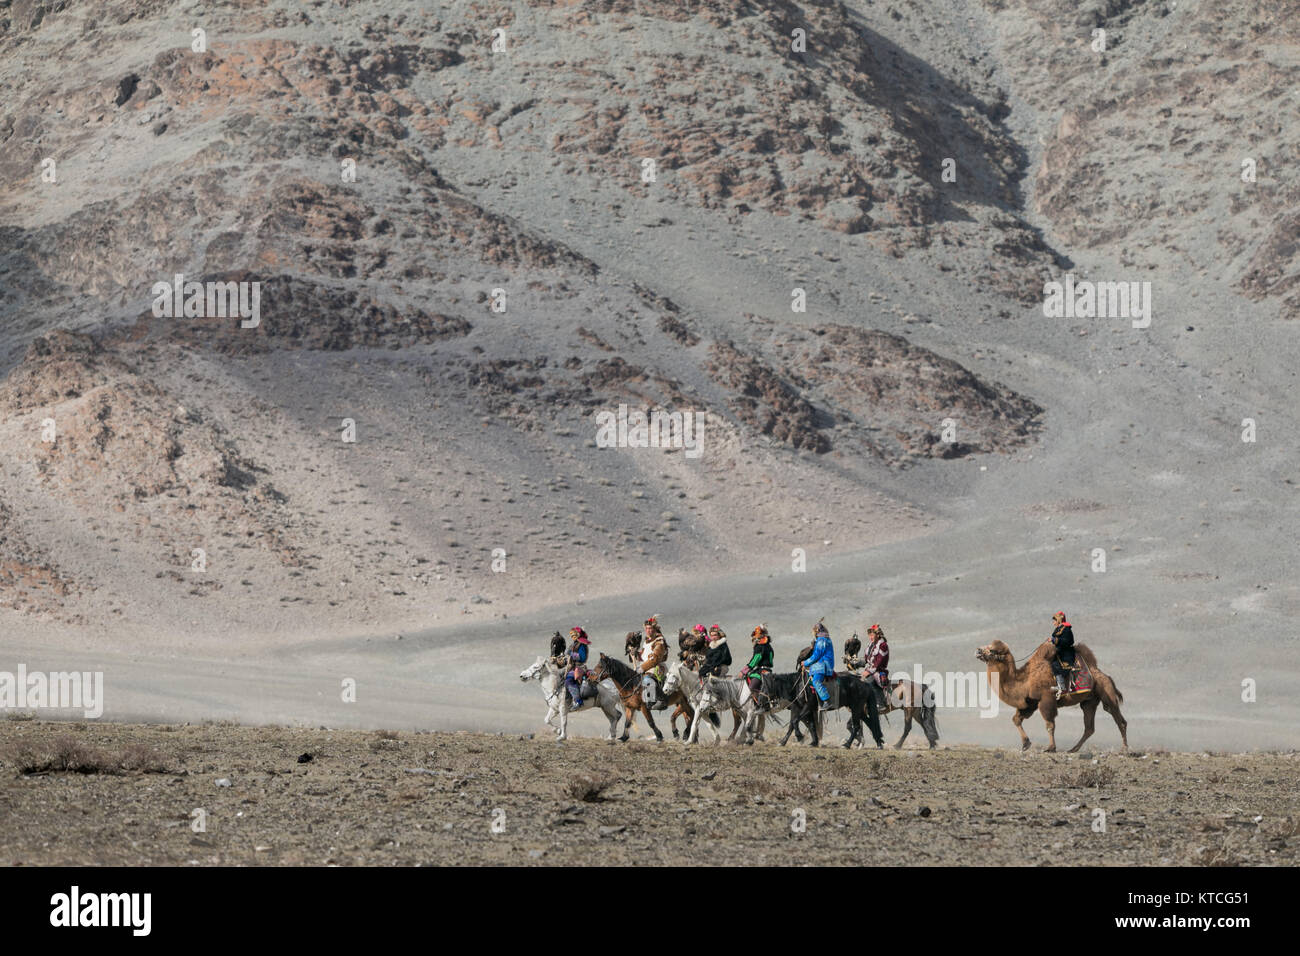 Kazakh eagle hunters arrive on horseback to the Golden Eagle Festival in Mongolia Stock Photo